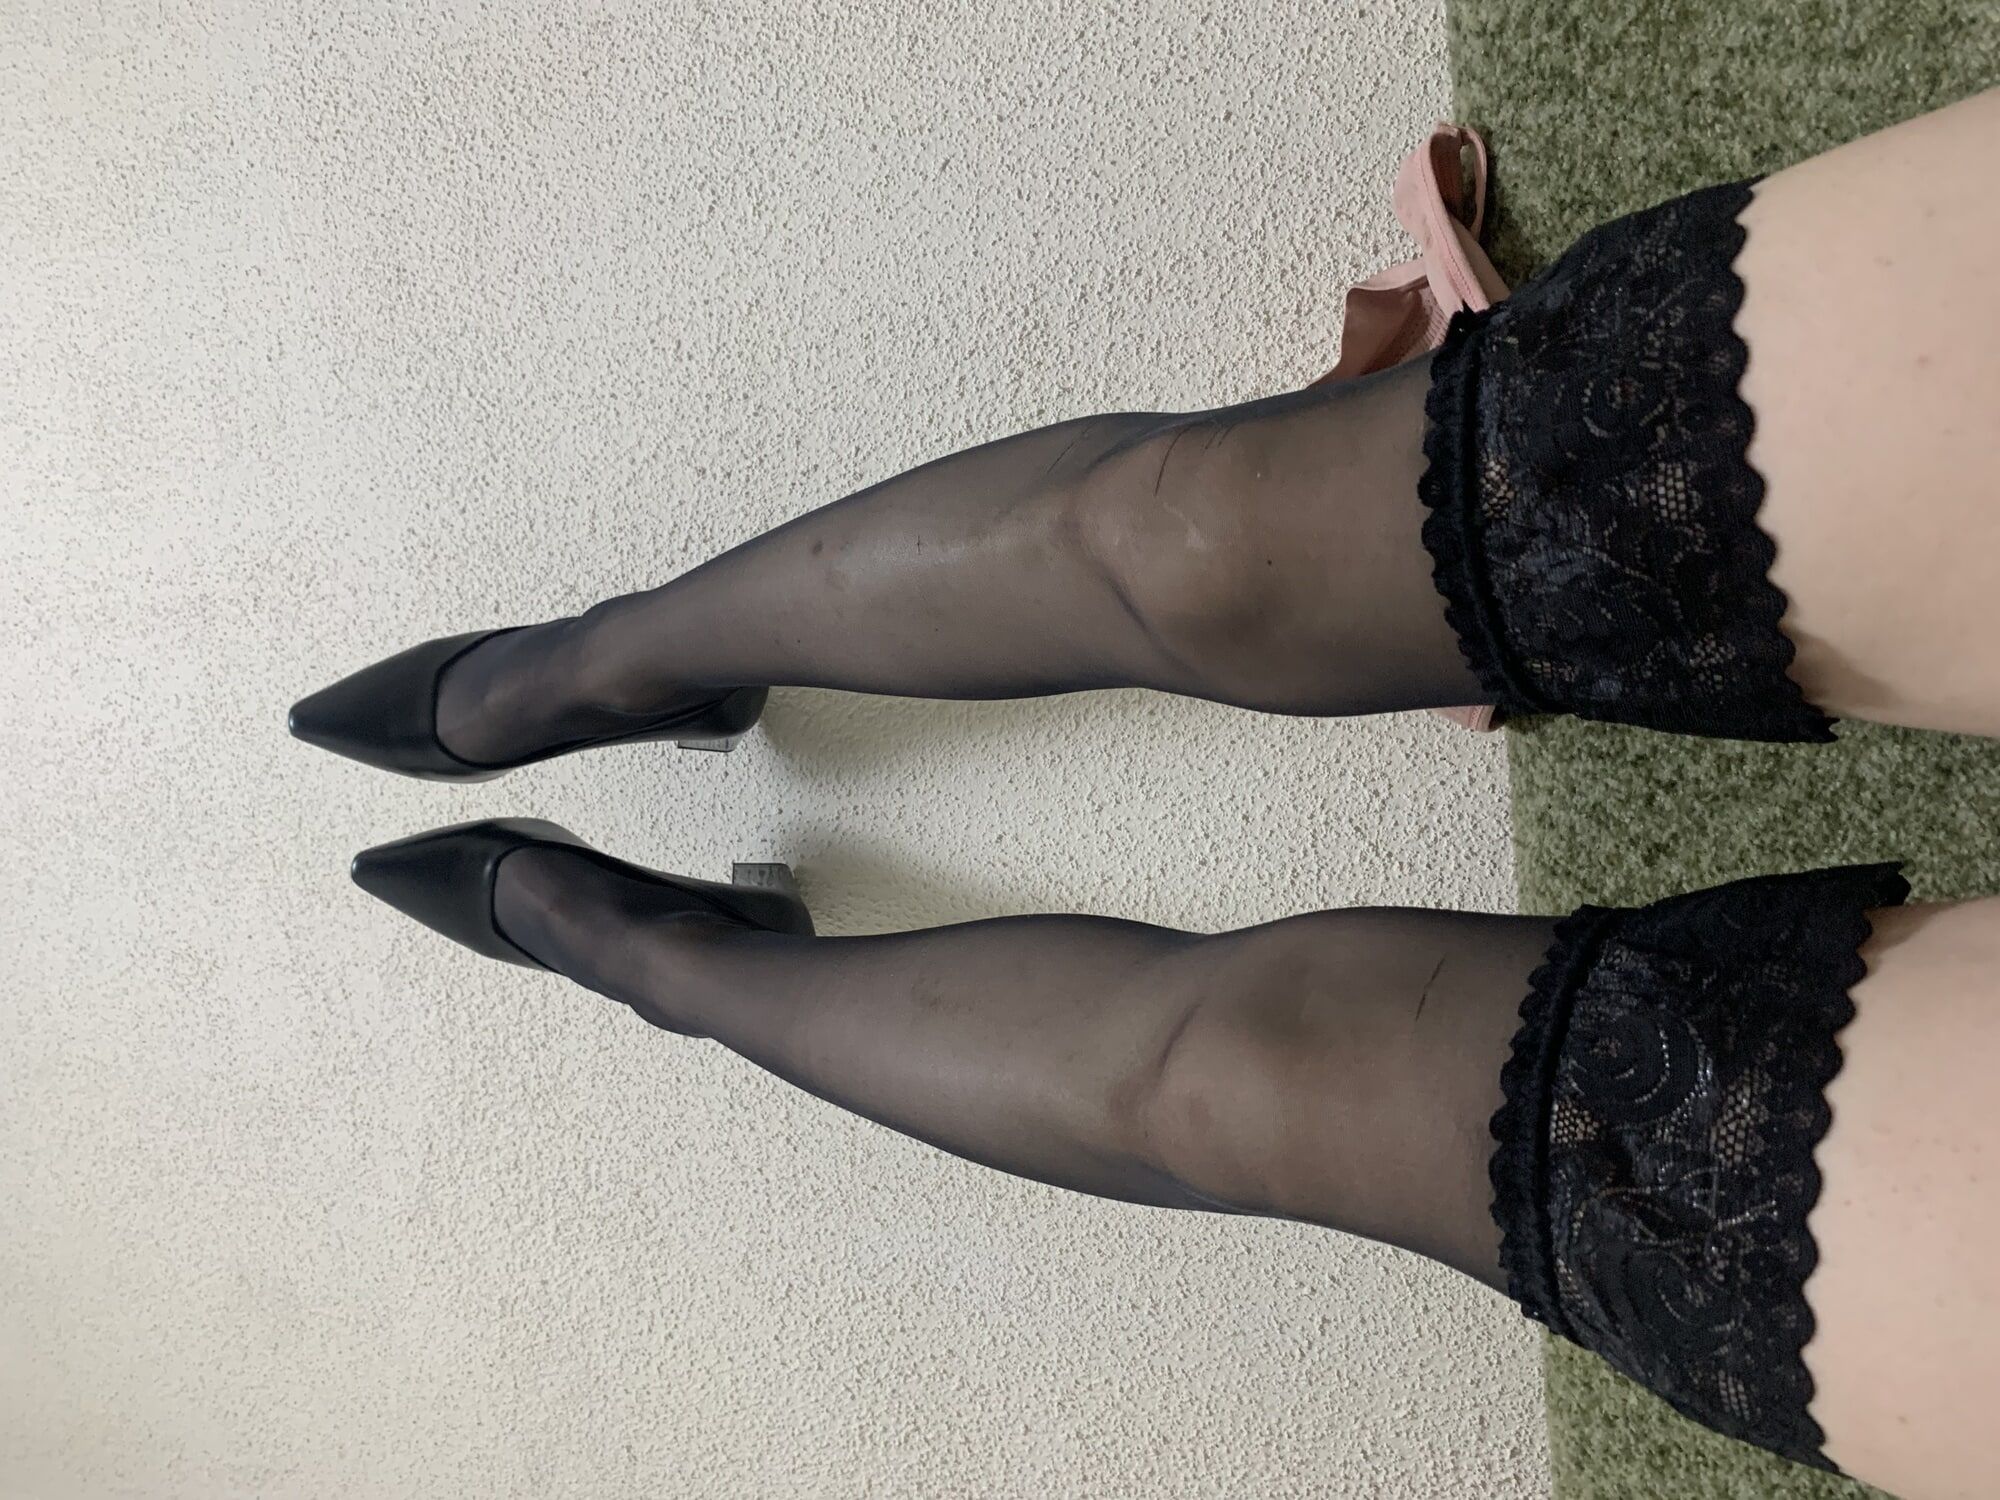 Tranny sissy crossdresser pull legs in stockings with heels 